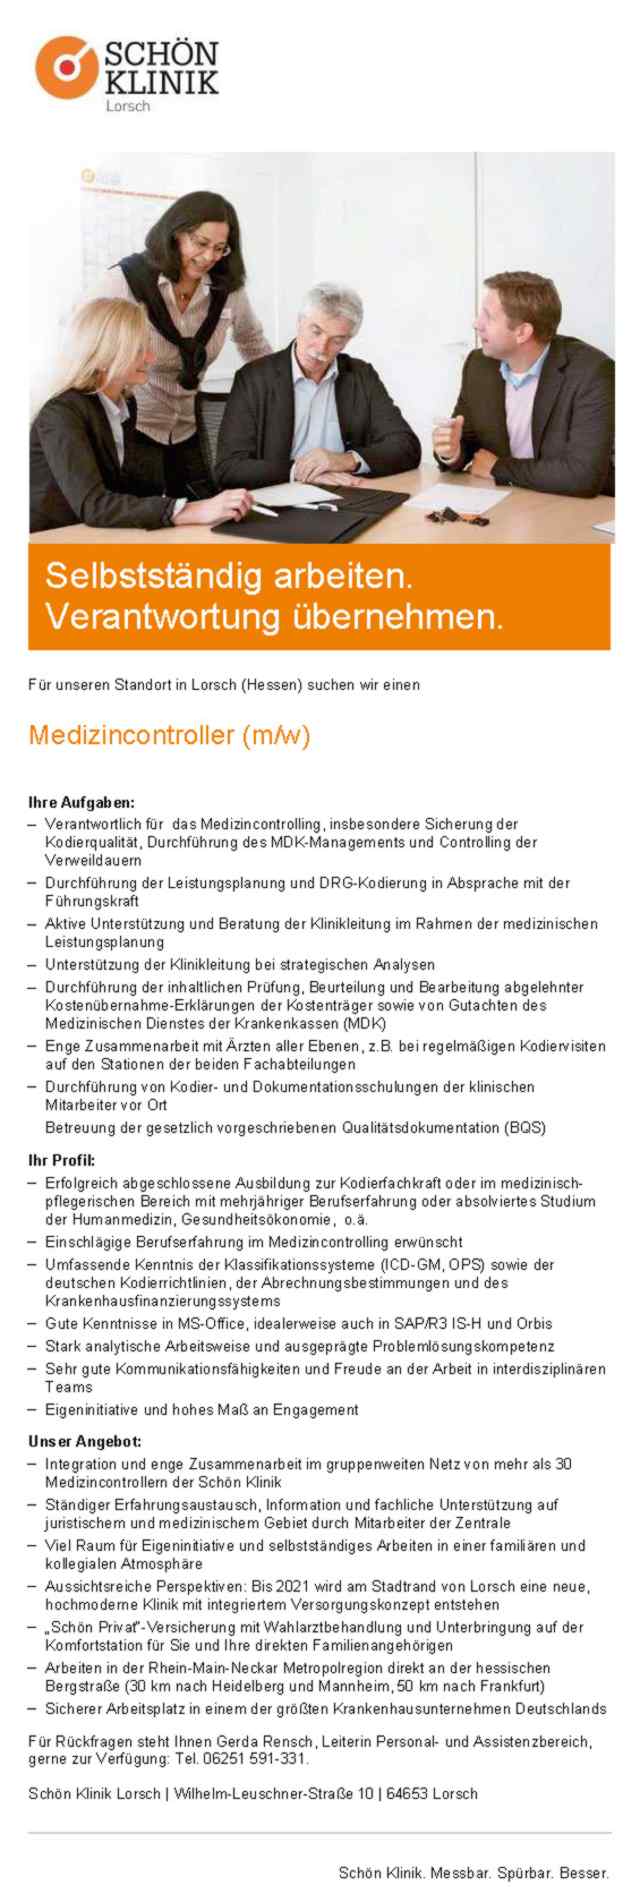 Schön Klinik Lorsch: Medizincontroller (m/w)